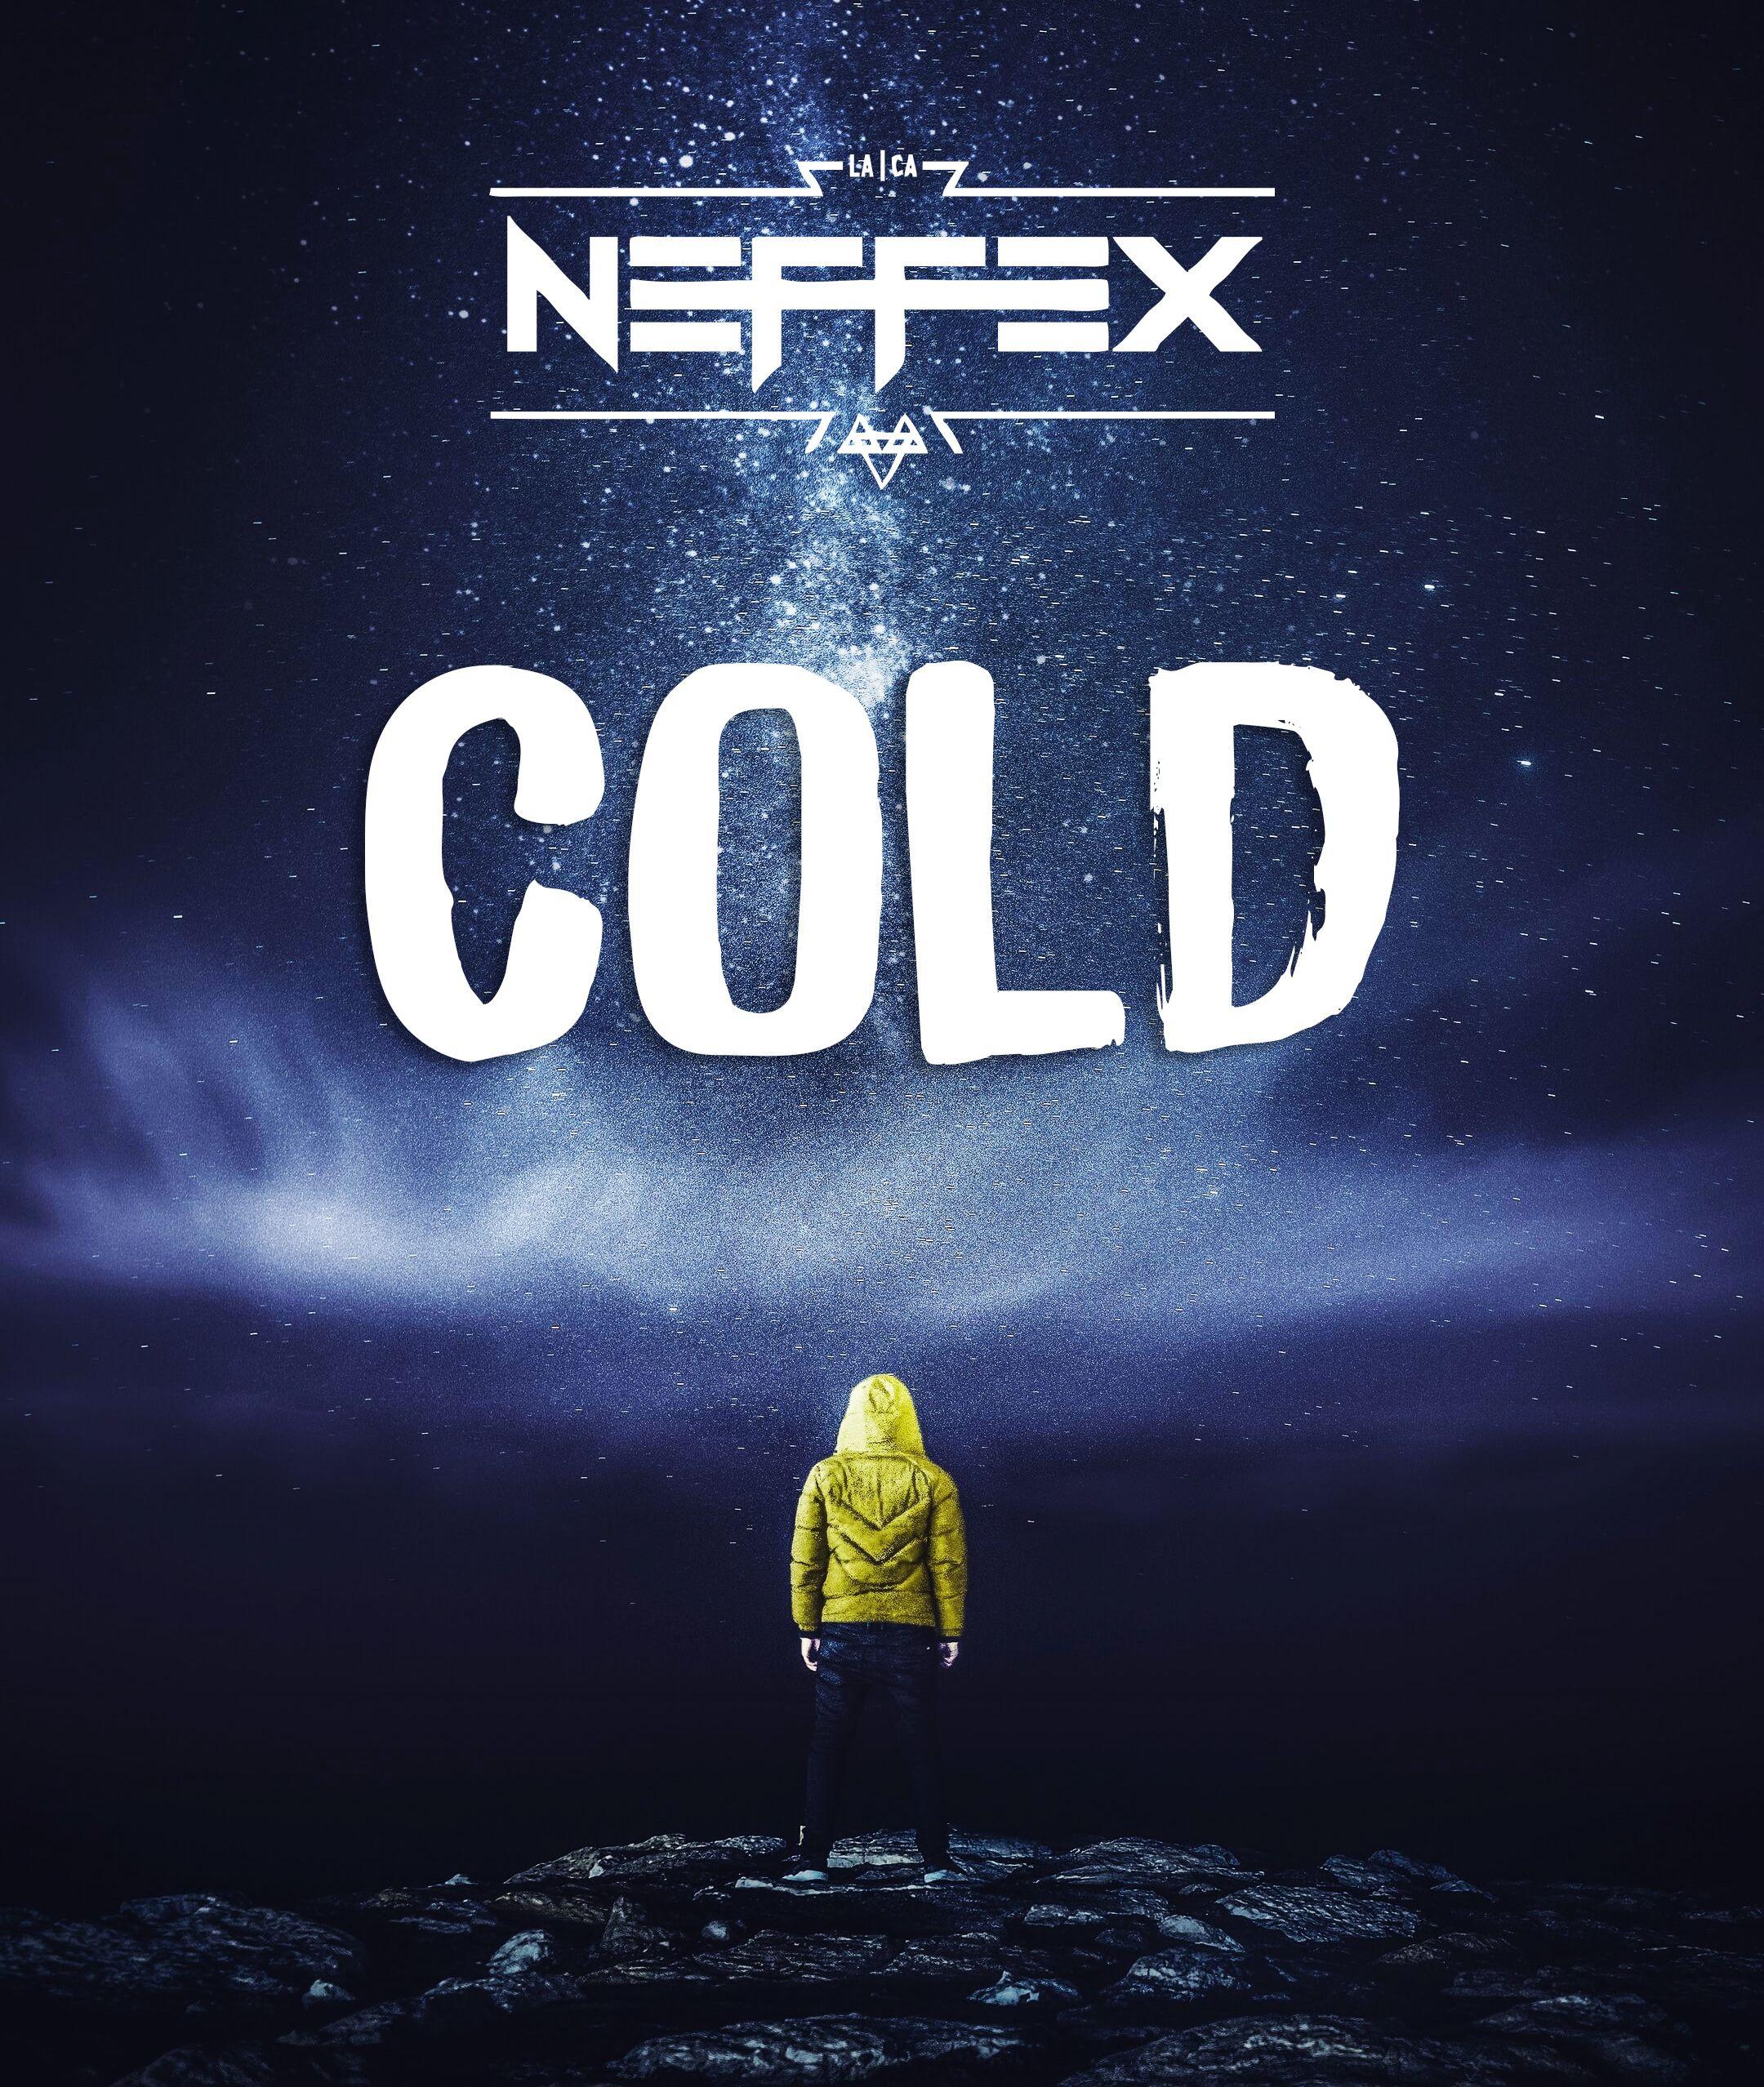 Cold mp3. NEFFEX Cold. NEFFEX Cold album. NEFFEX Cold обложка. Album Art Cold Cold.